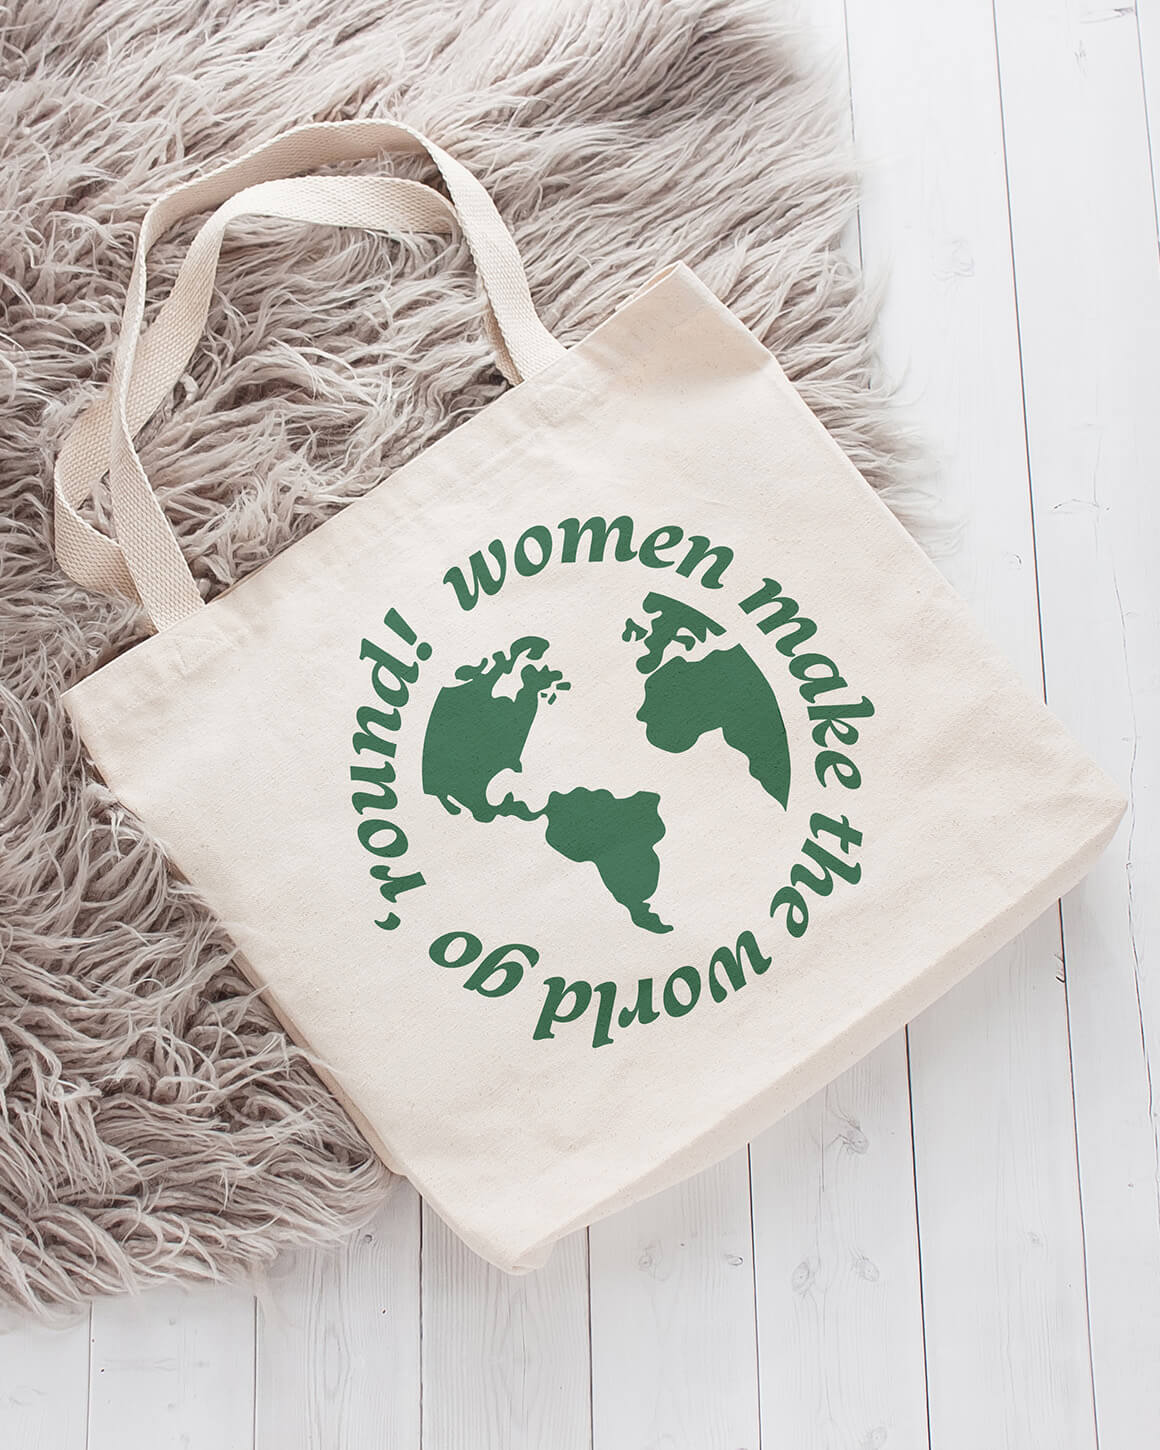 Women Make The World Go Round Feminist Tote Bag - The Feminista